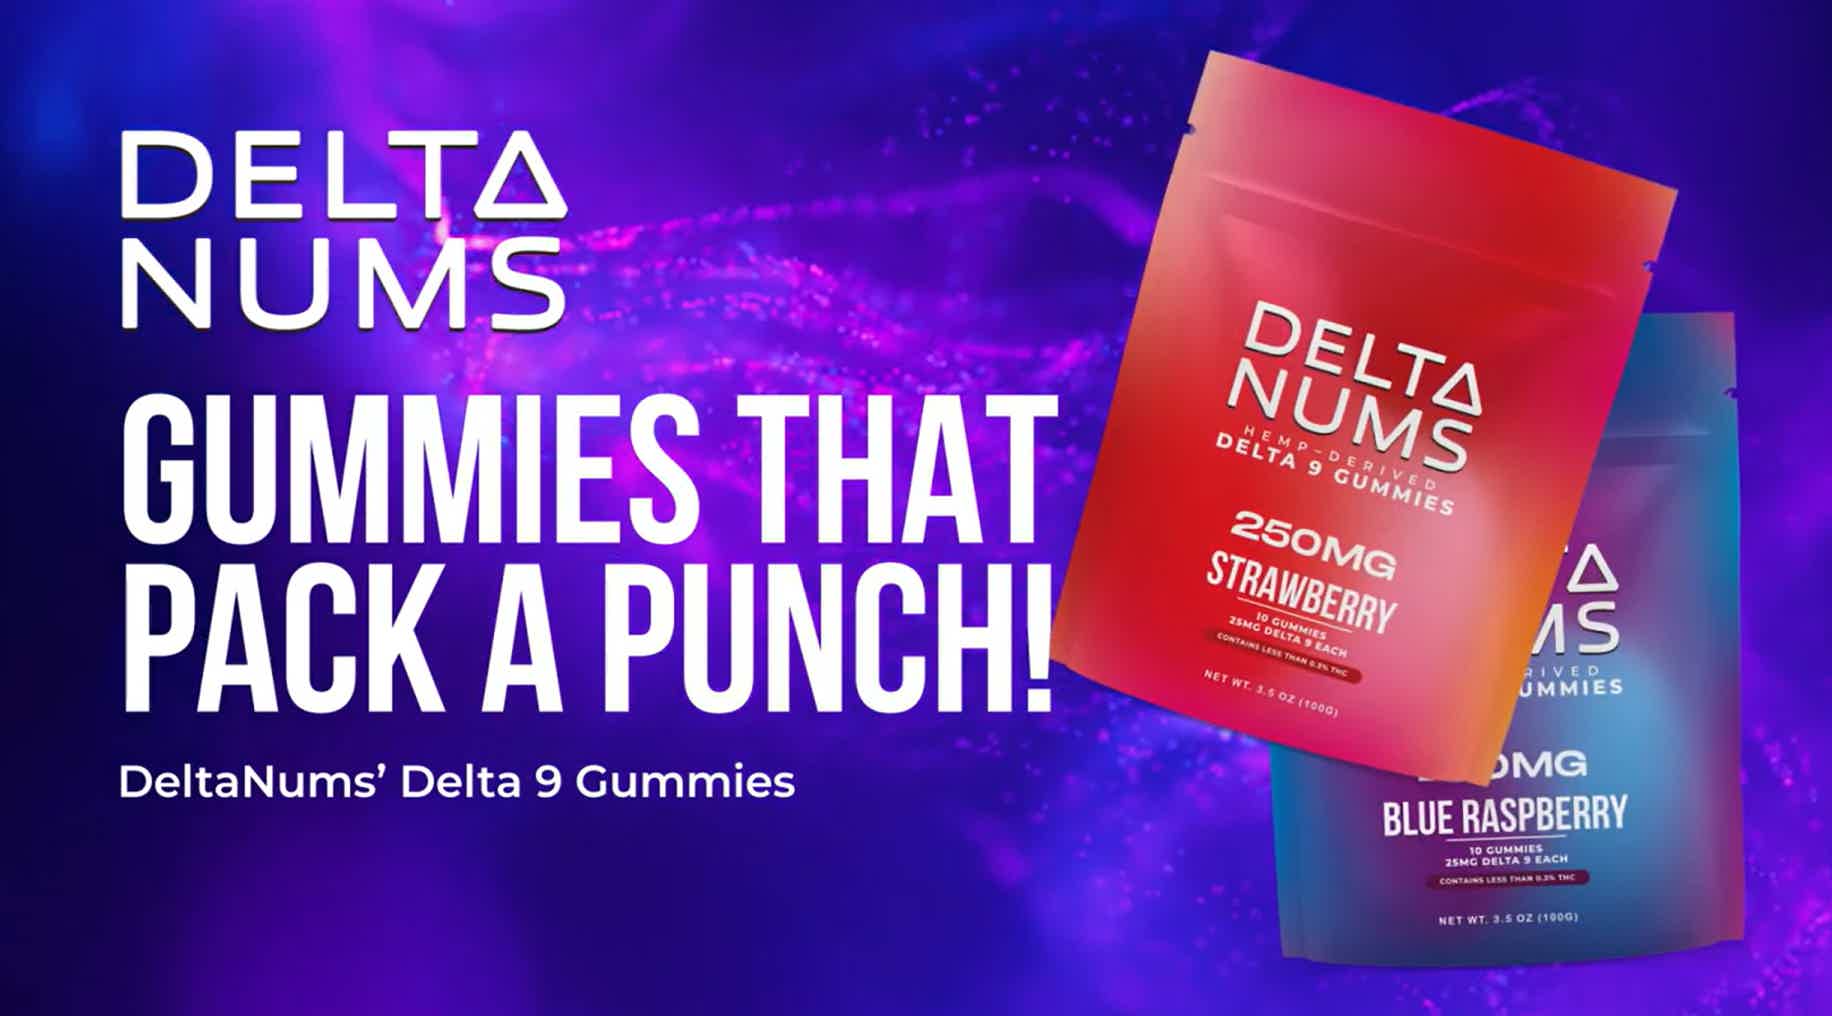 Hemp derived Delta 9 infused gummies. 25mg of D9 per gummy. Derived from hemp.